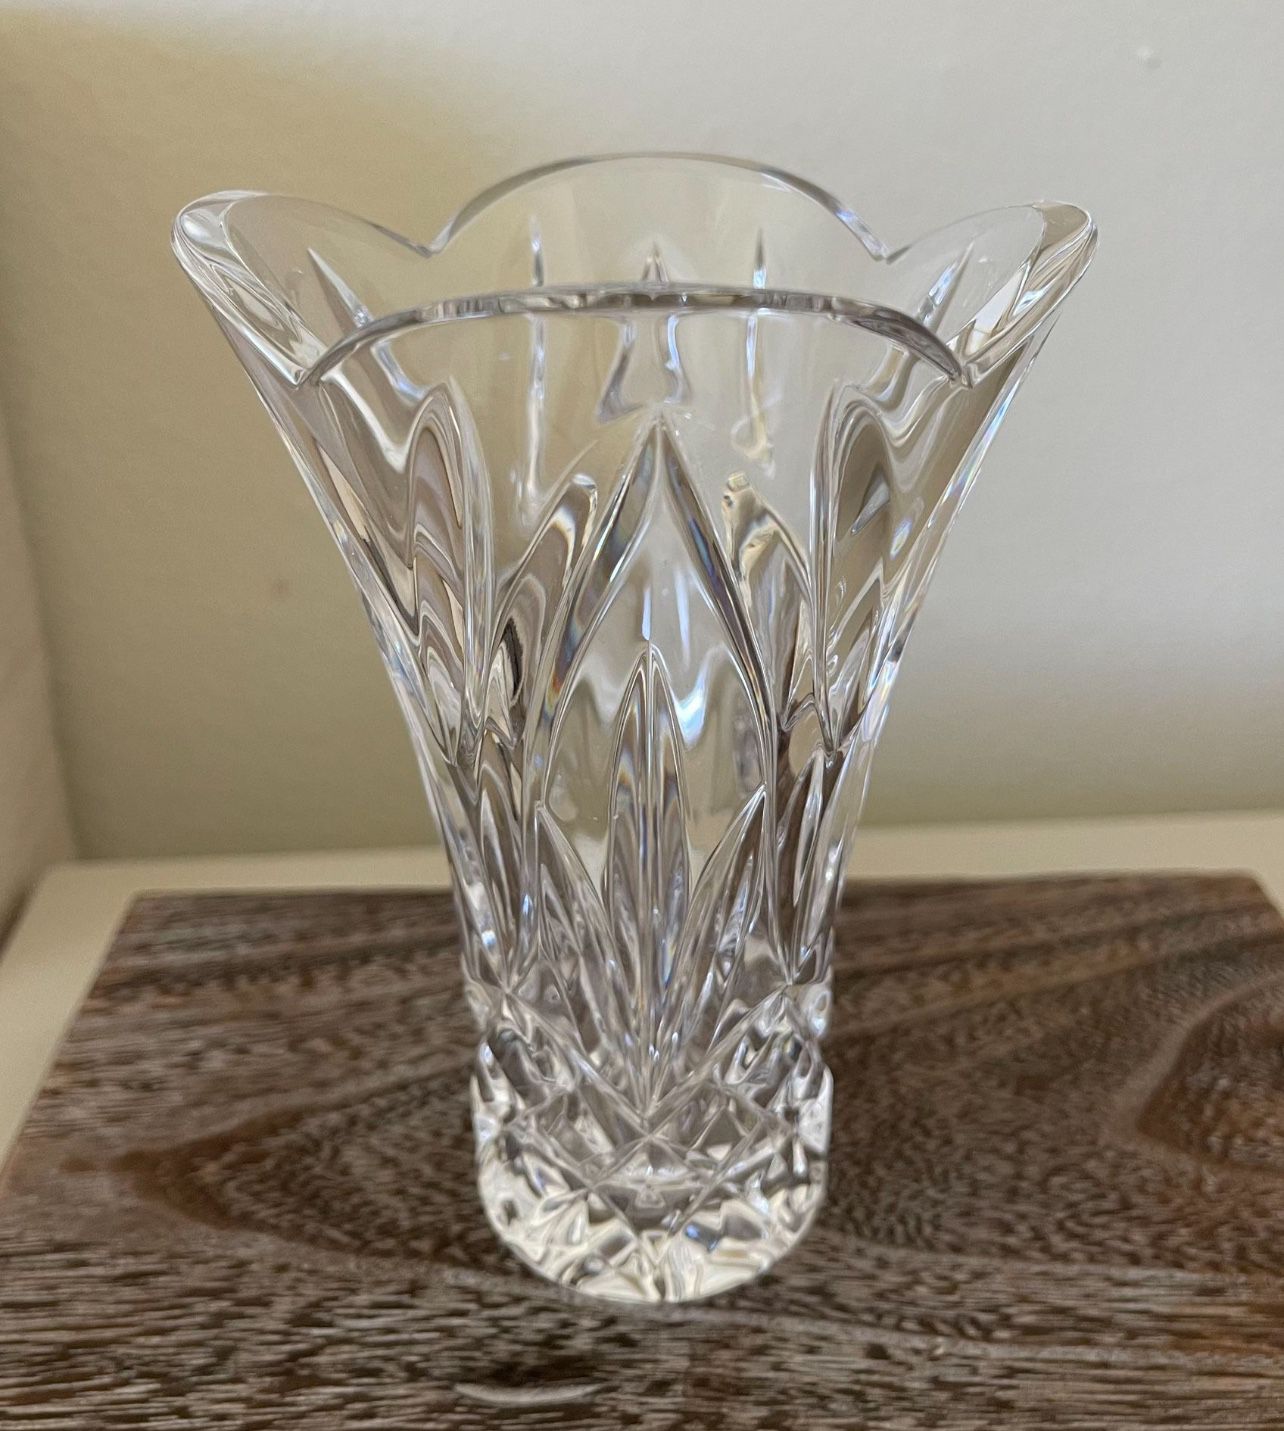 Waterford Crystal GLENFALL 6” Vase Wedge Cut Flared